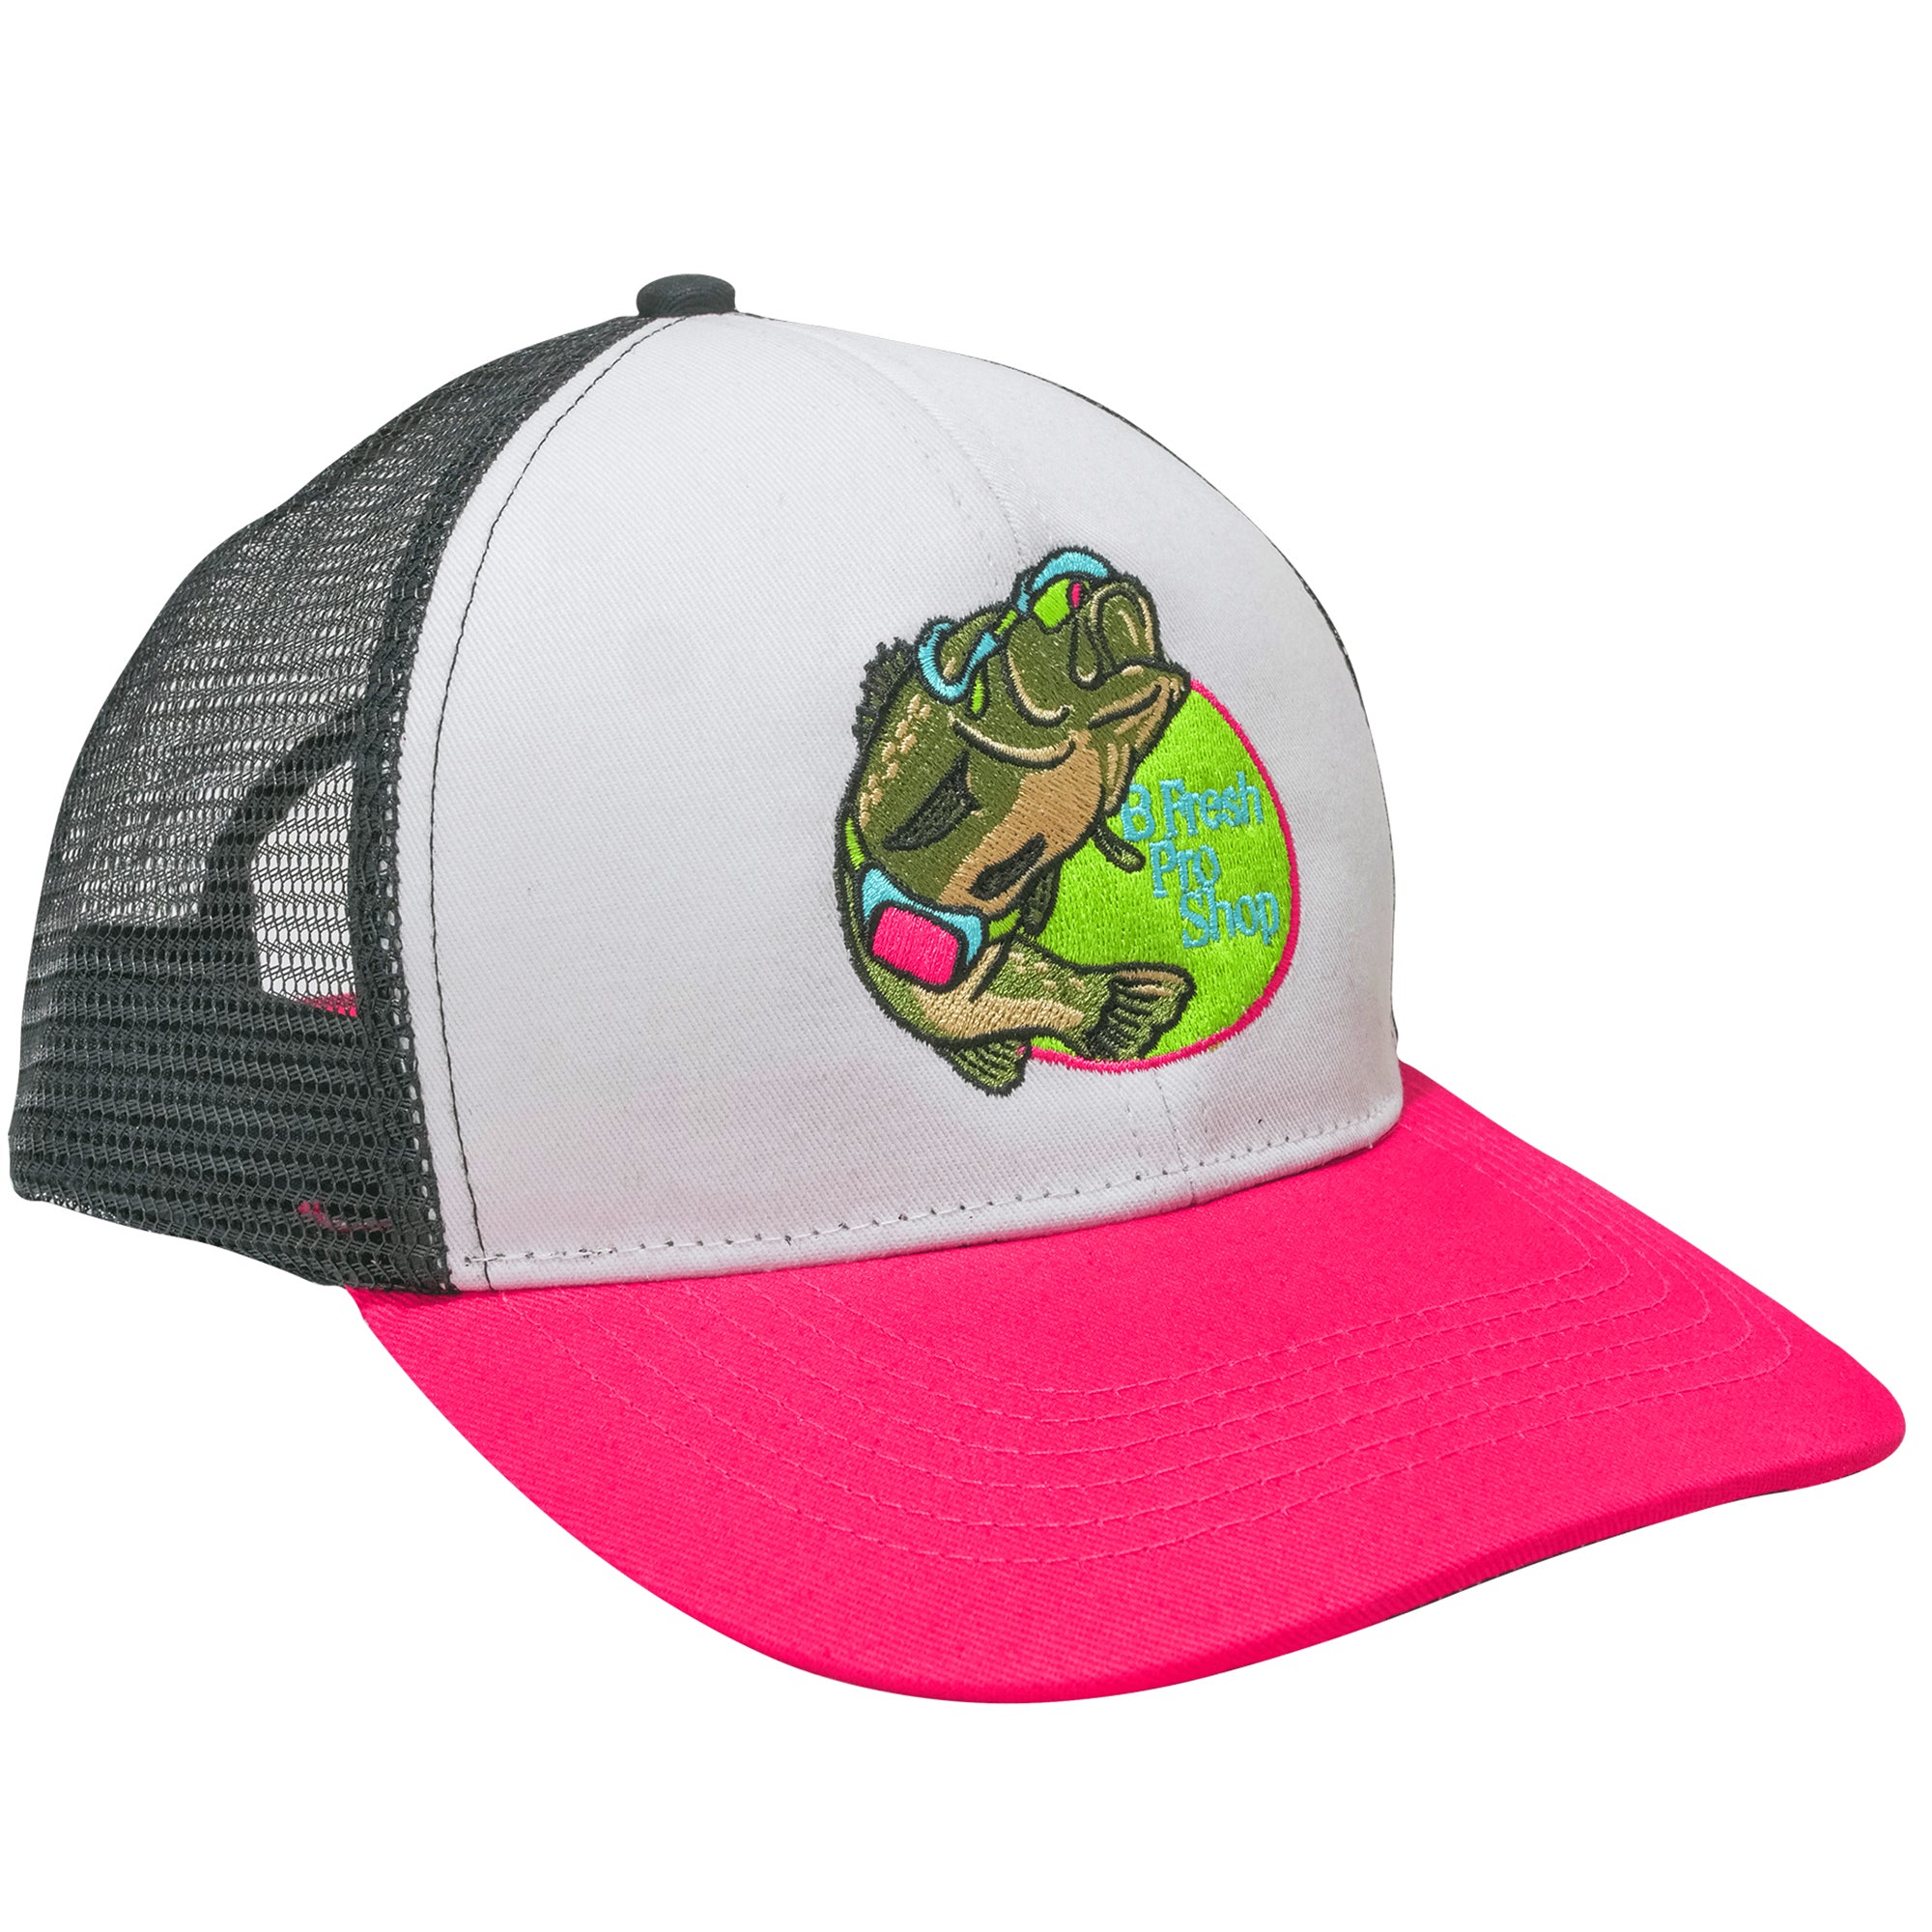 Fresh Pro Shop Pink Bill Mesh Trucker Style Hat Fishing Outdoors. B Fresh Gear.